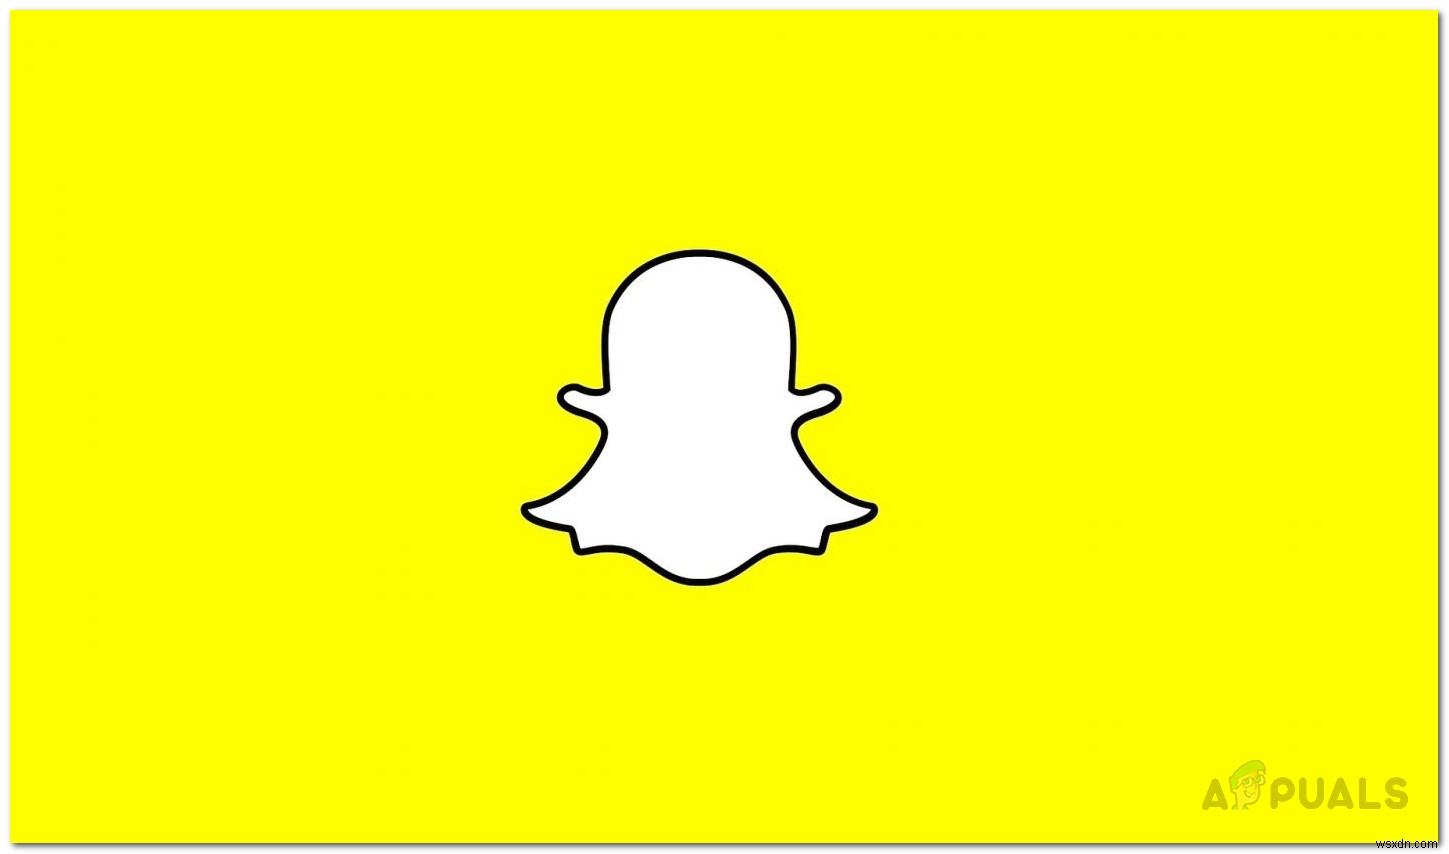 Snapchatでプライベートストーリーを作成する方法は？ 